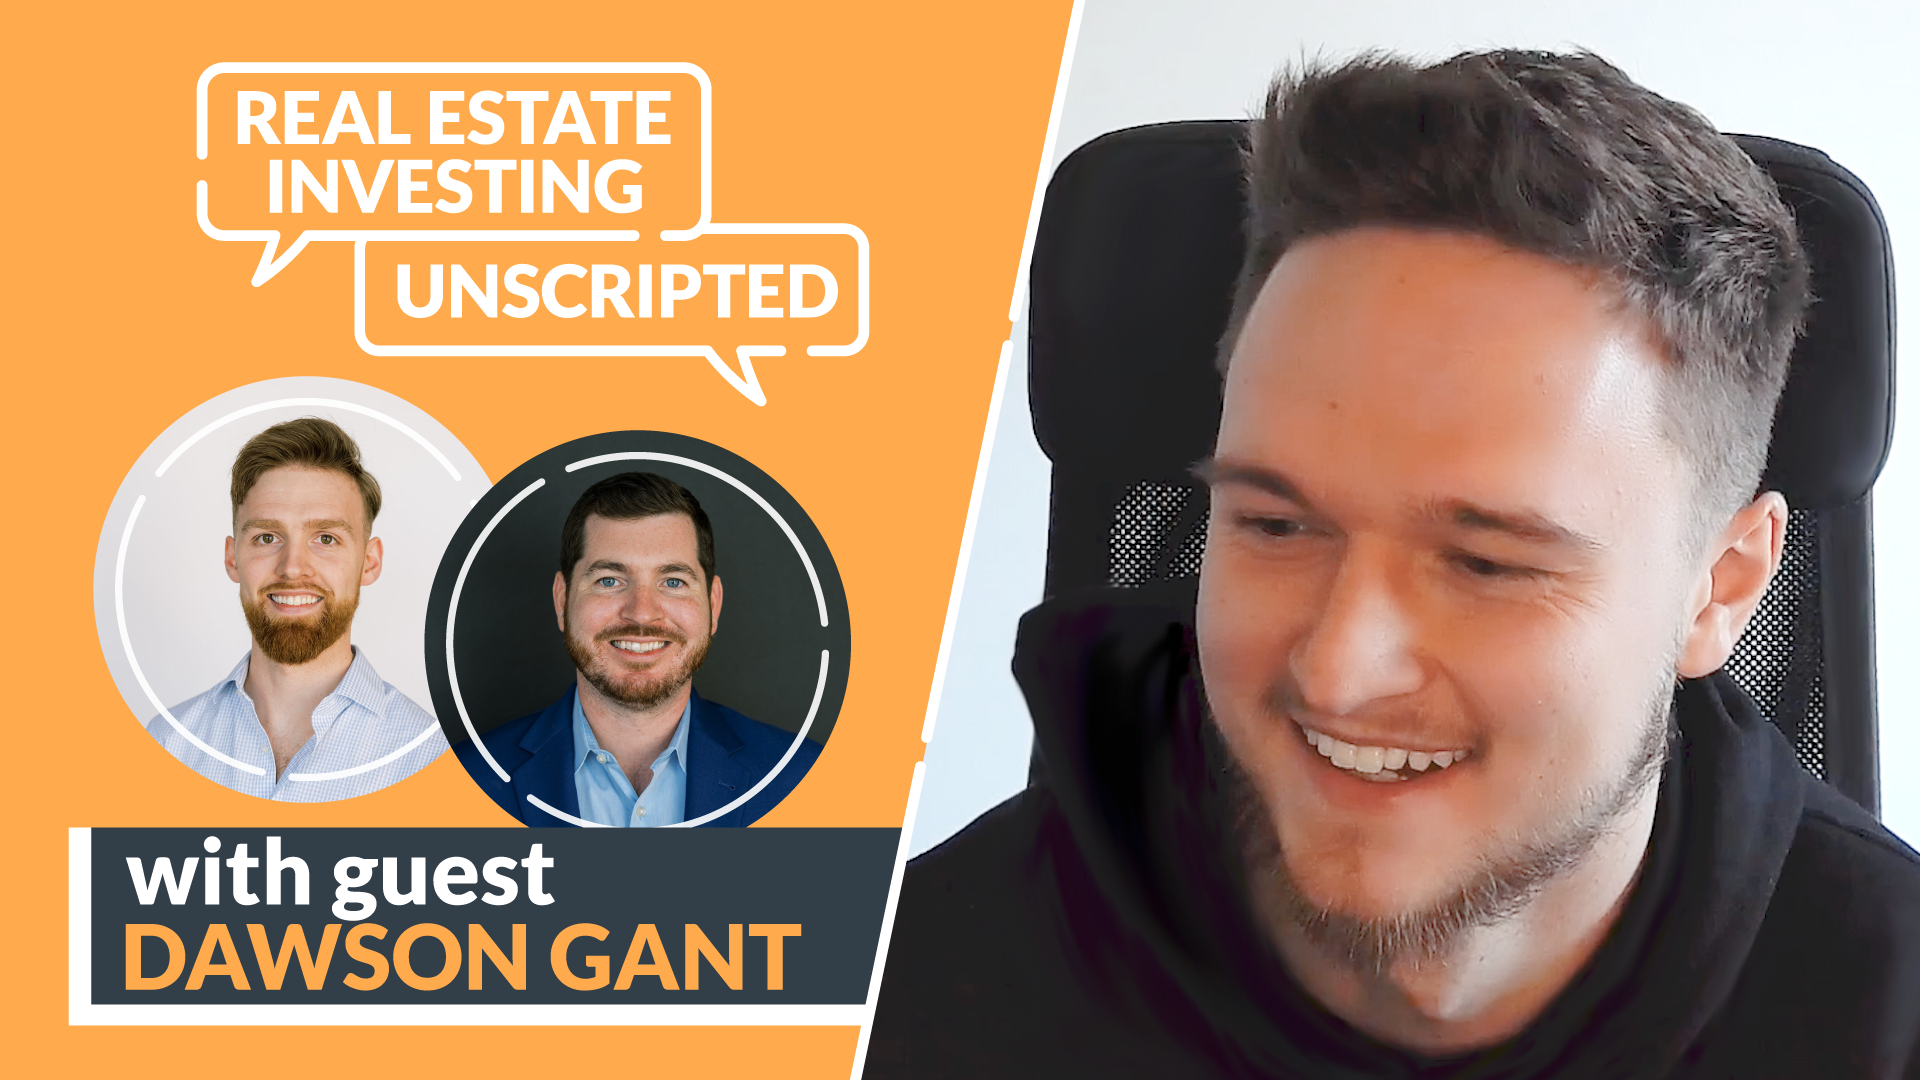 Dawson Gant is a real estate investor and entrepreneur.